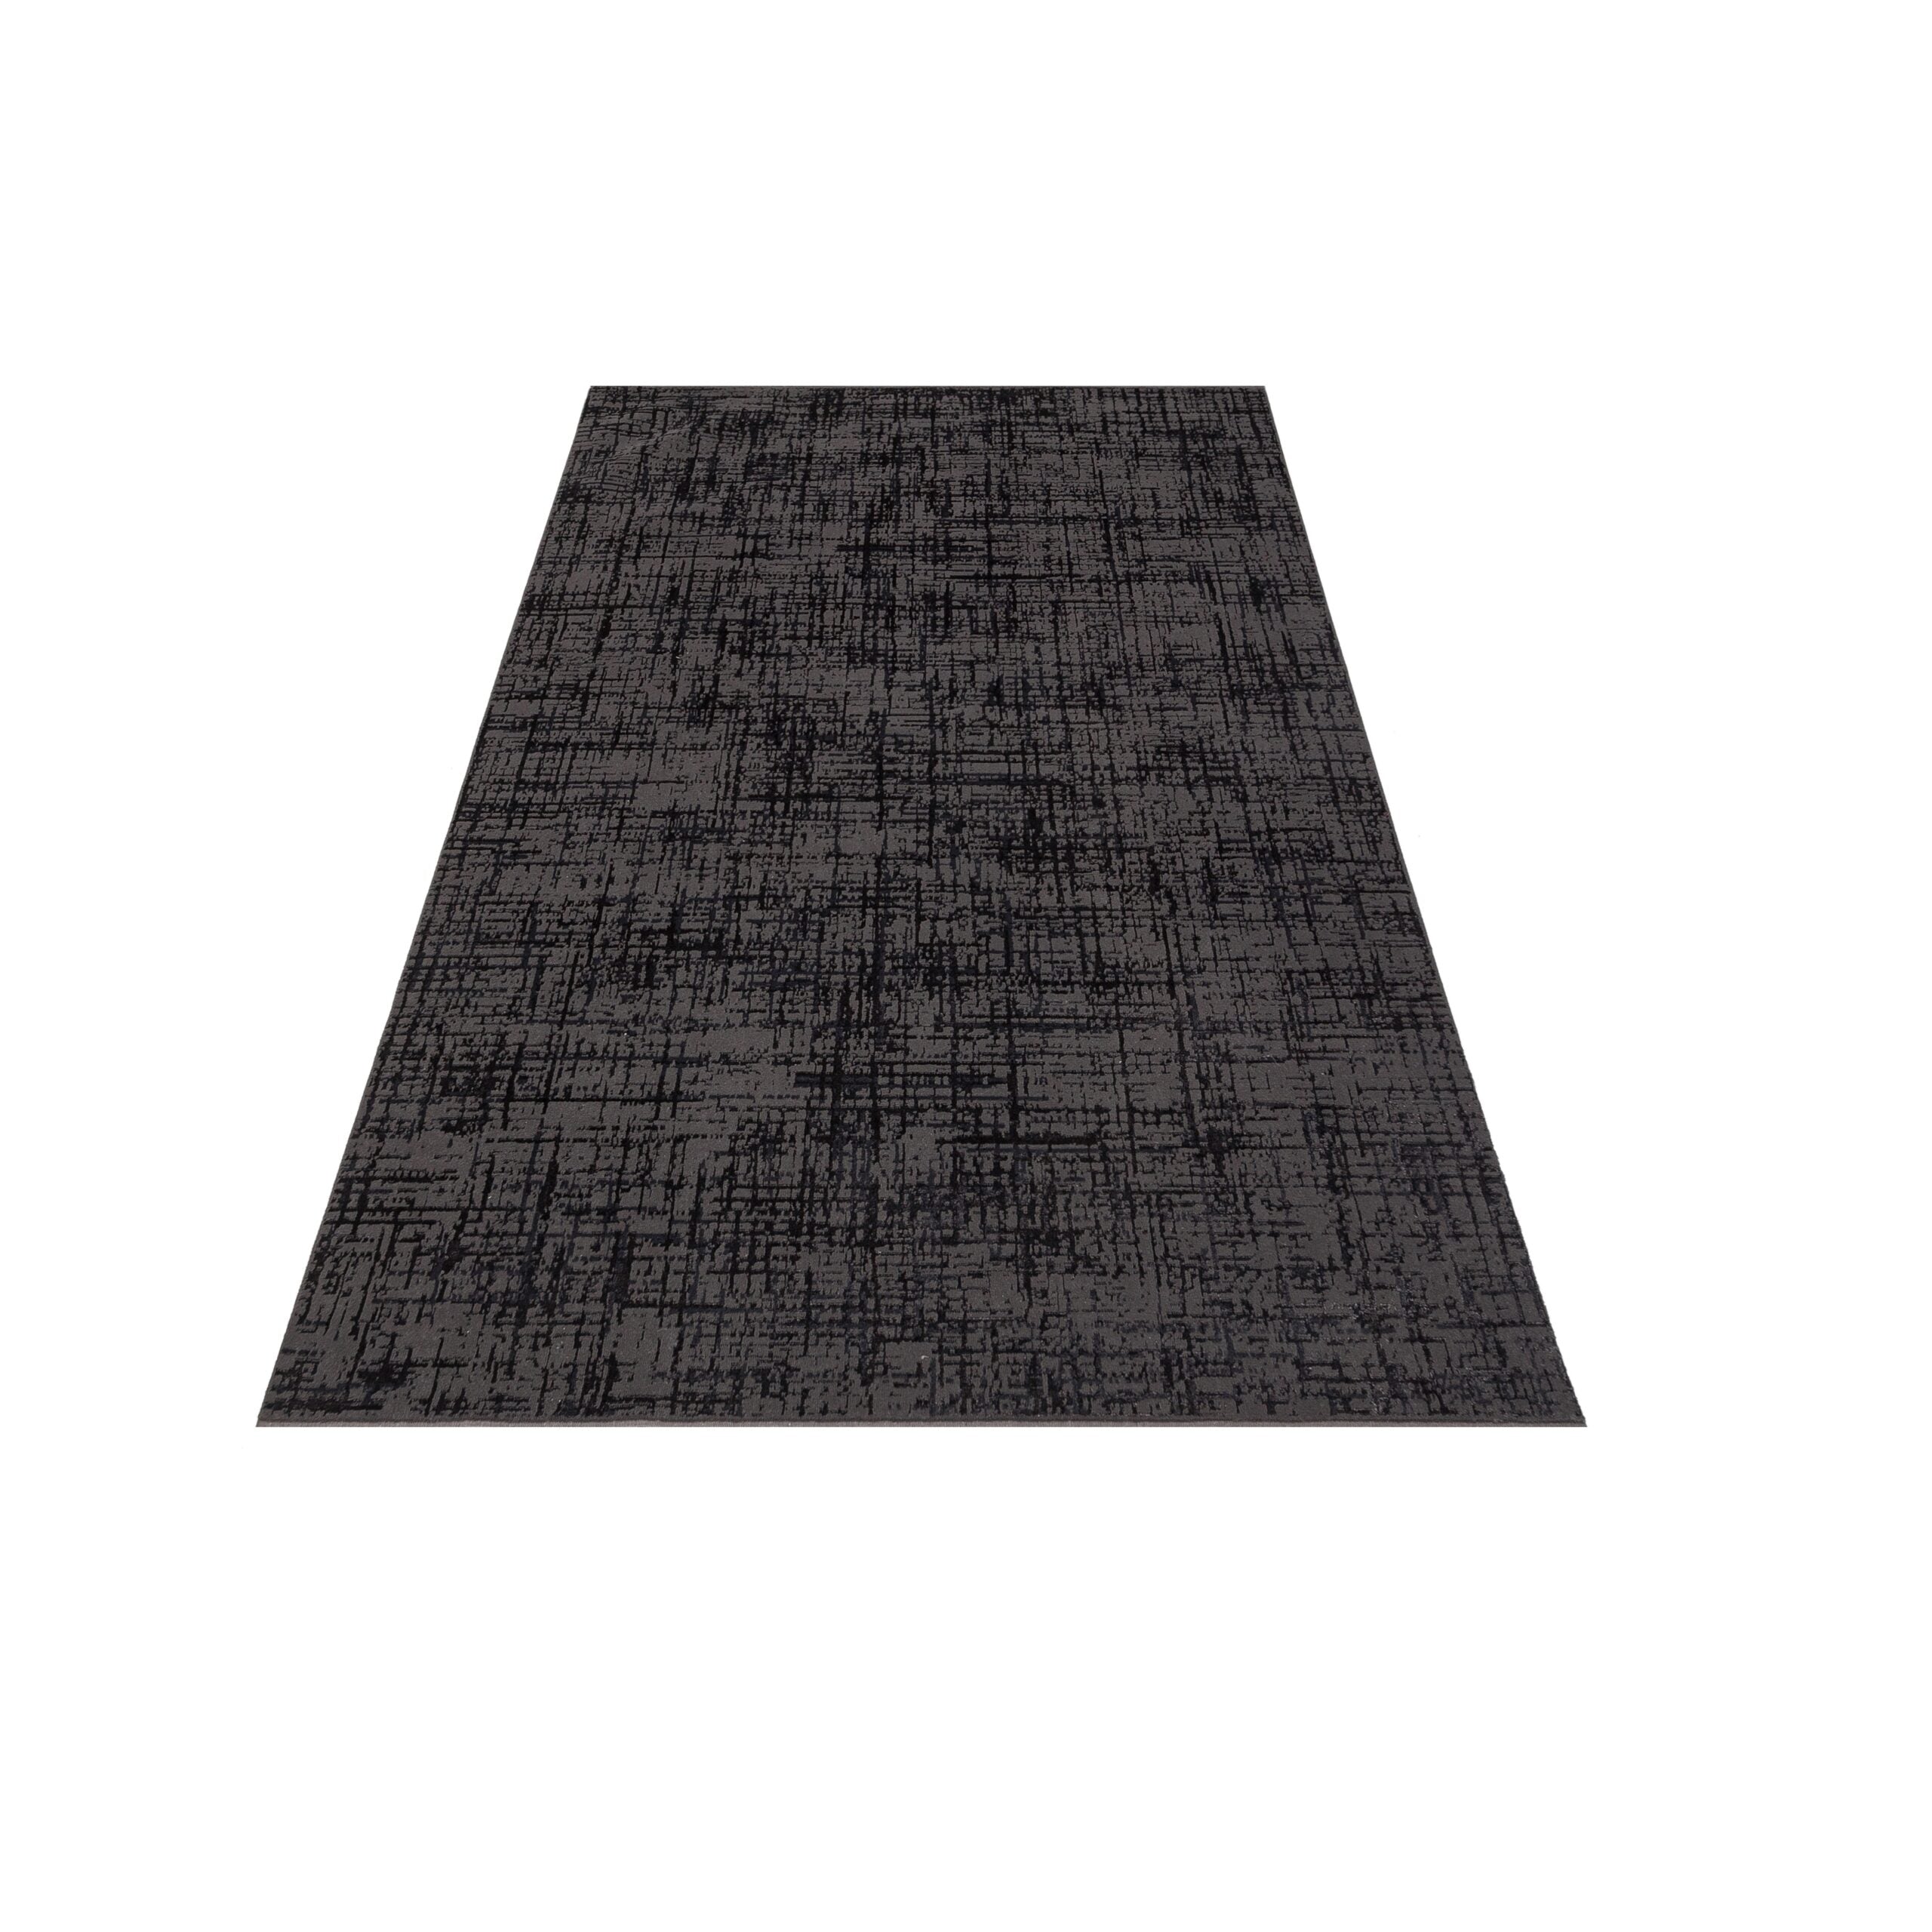 Carpet Byblos ivory 200x28591003richmond